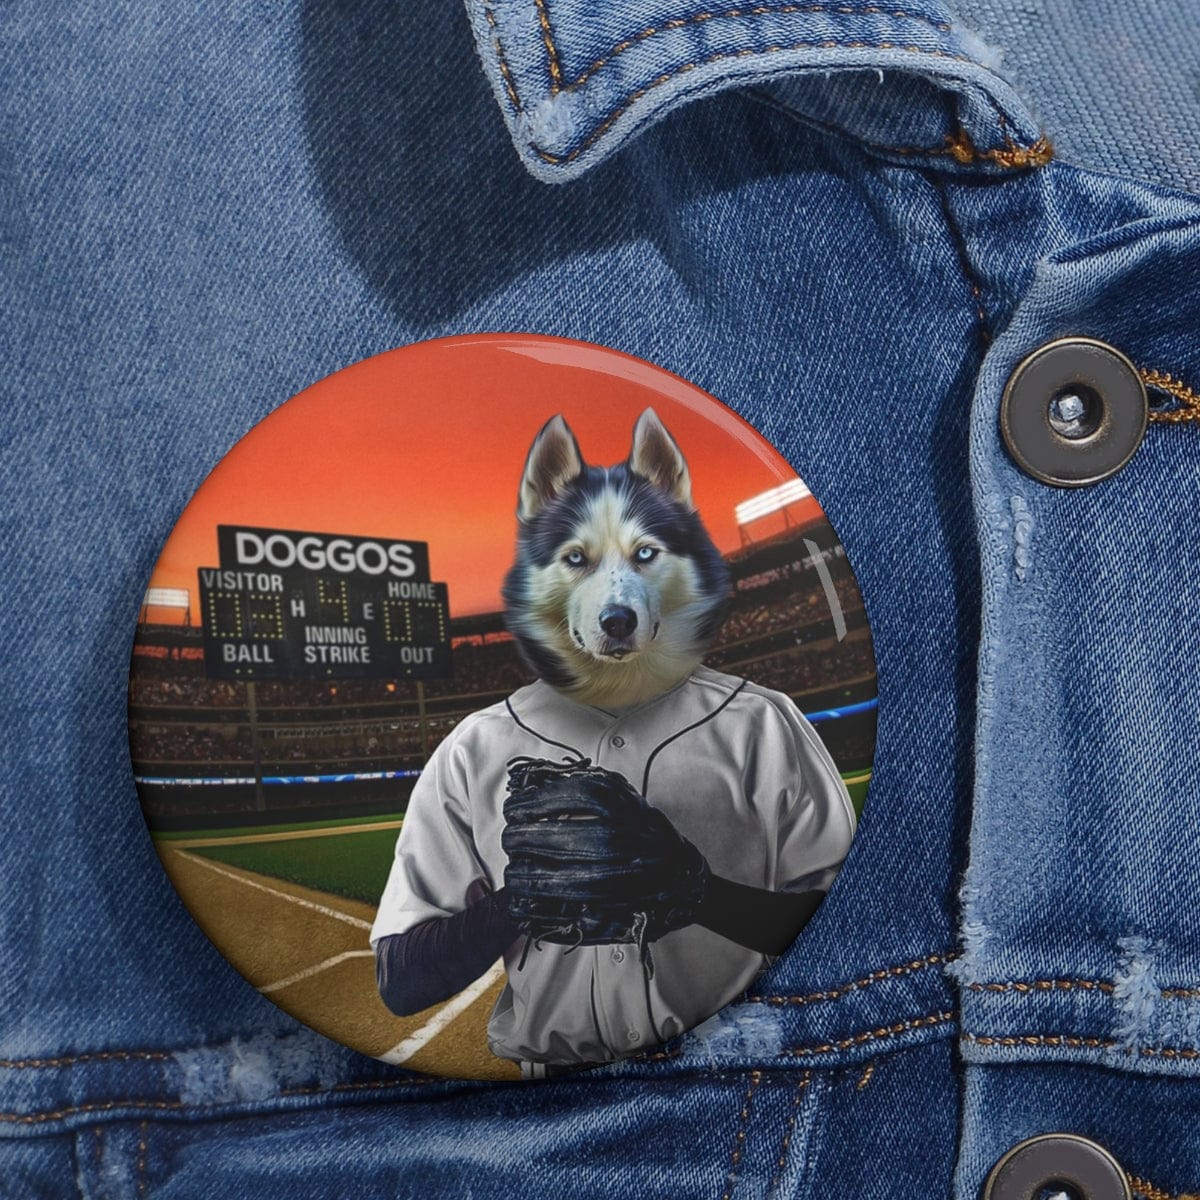 The Baseball Player Custom Pin